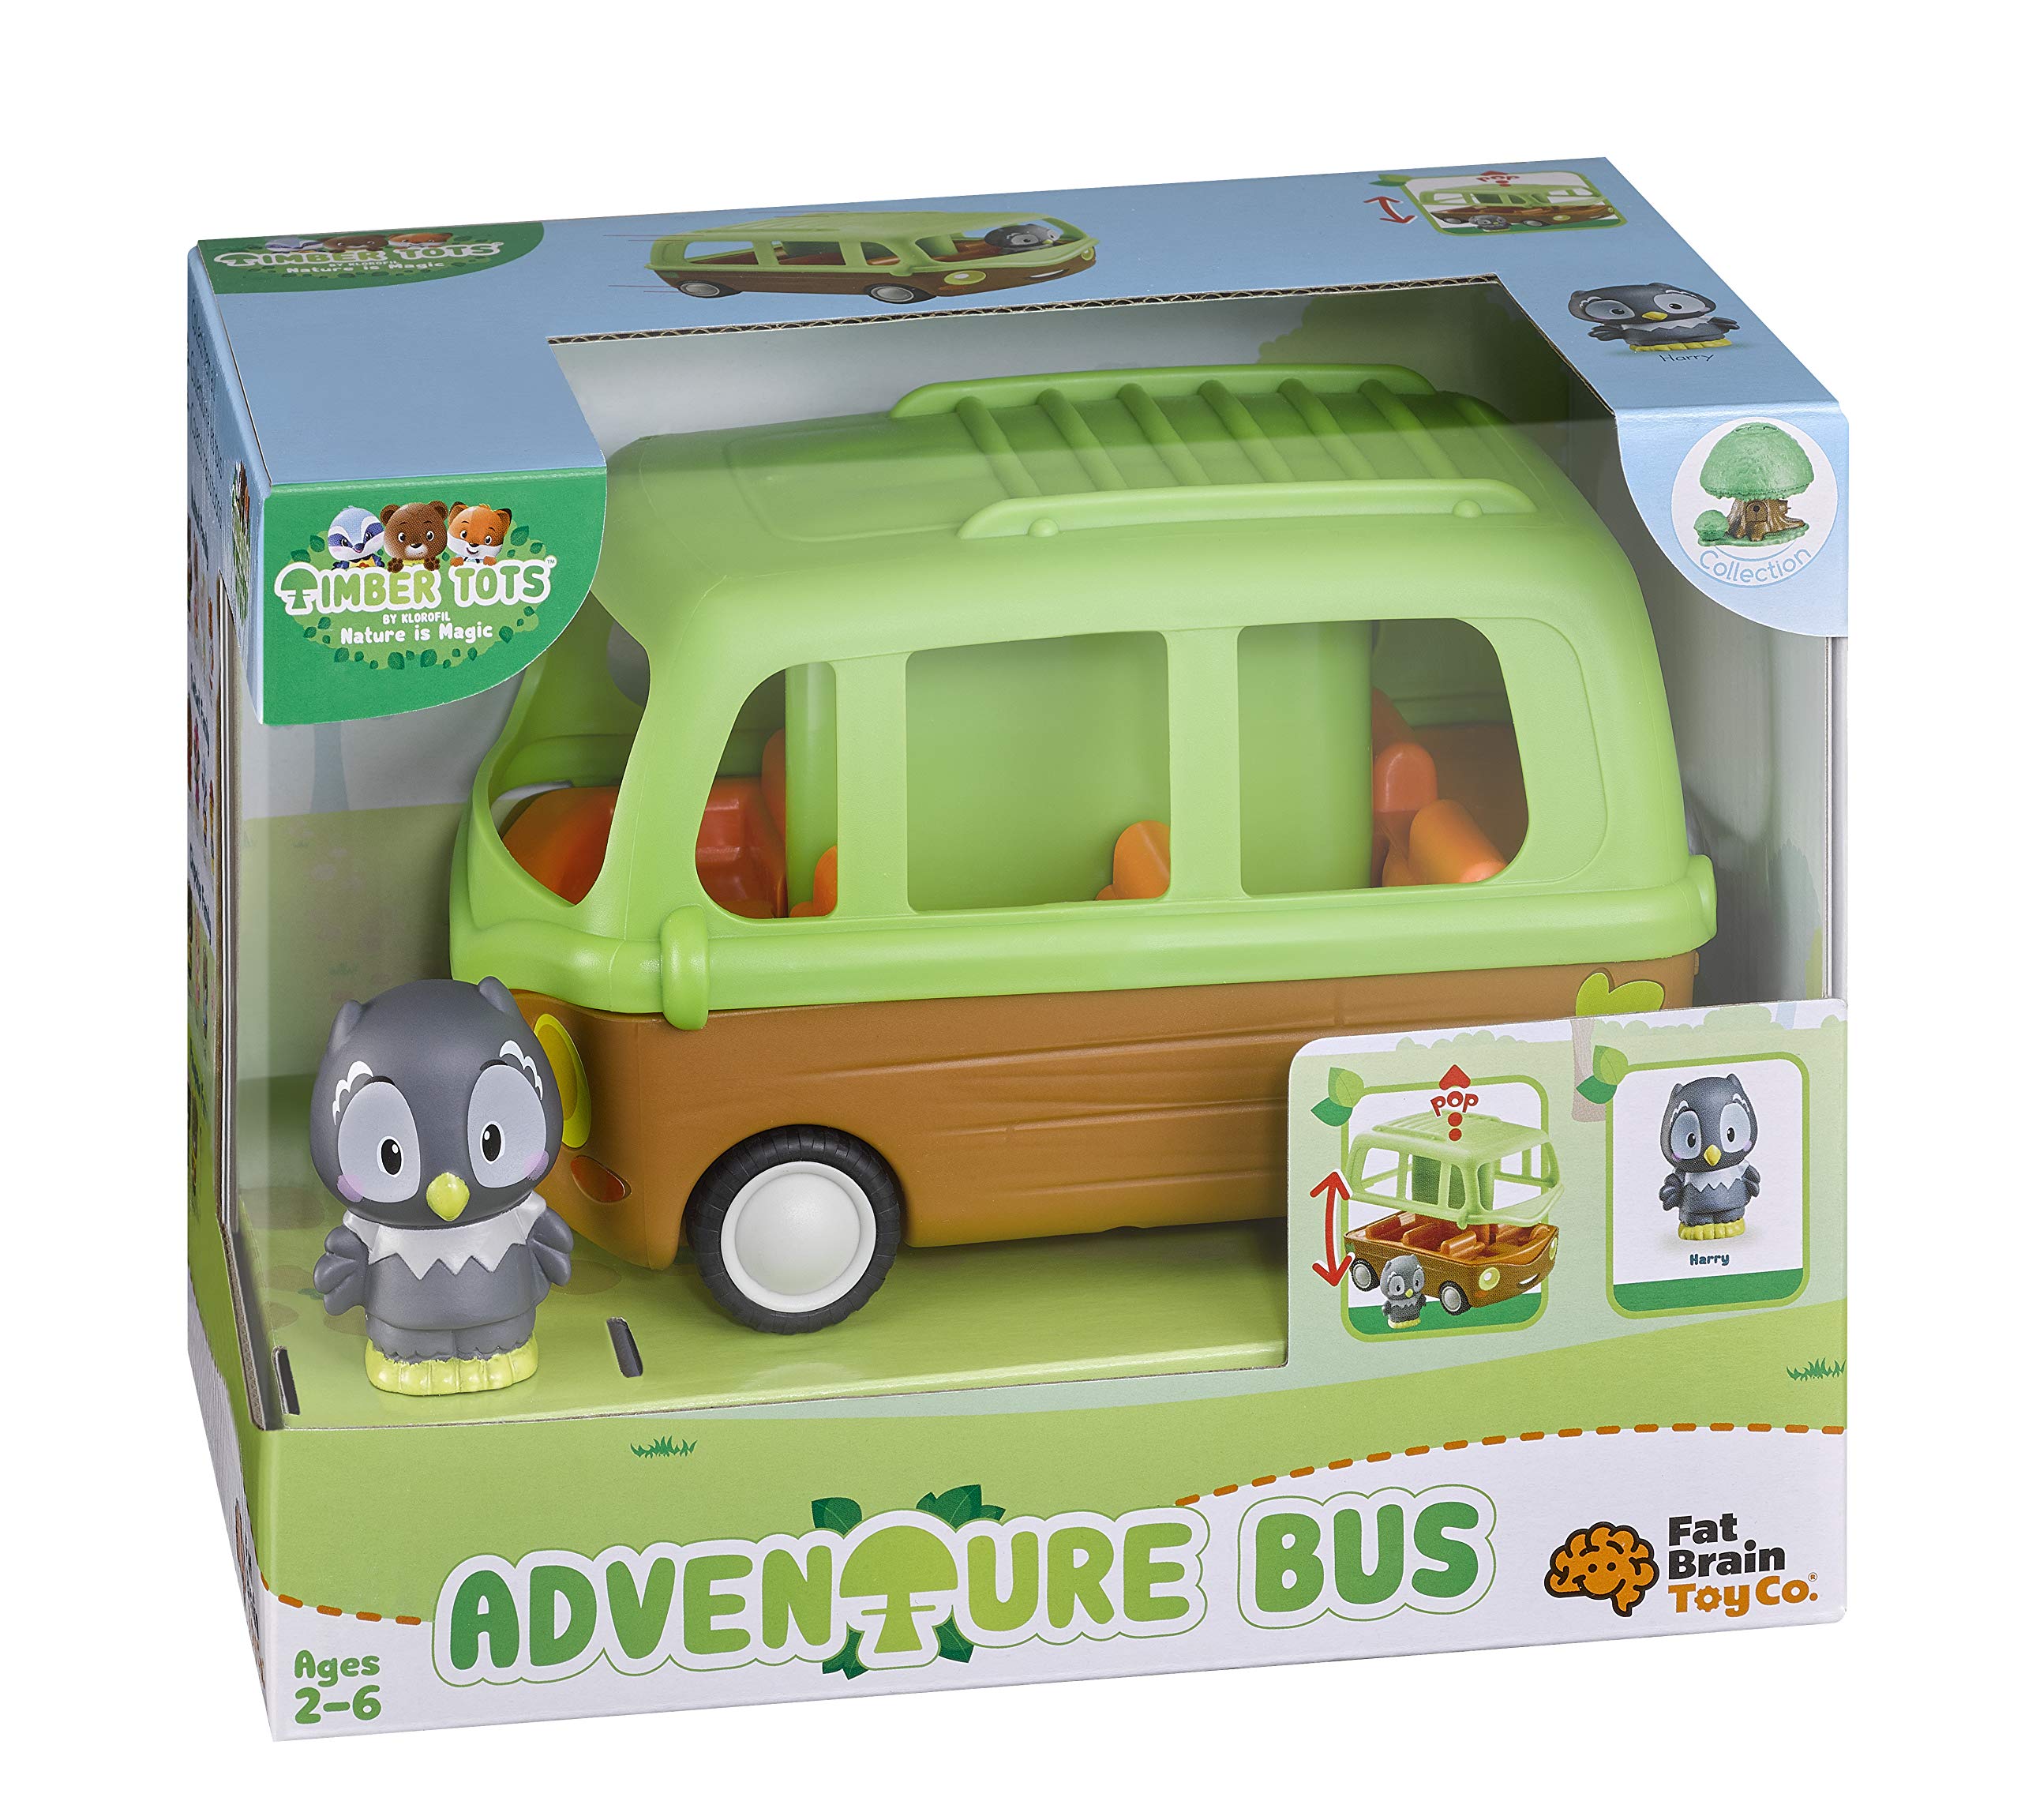 TimberTots Adventure Bus